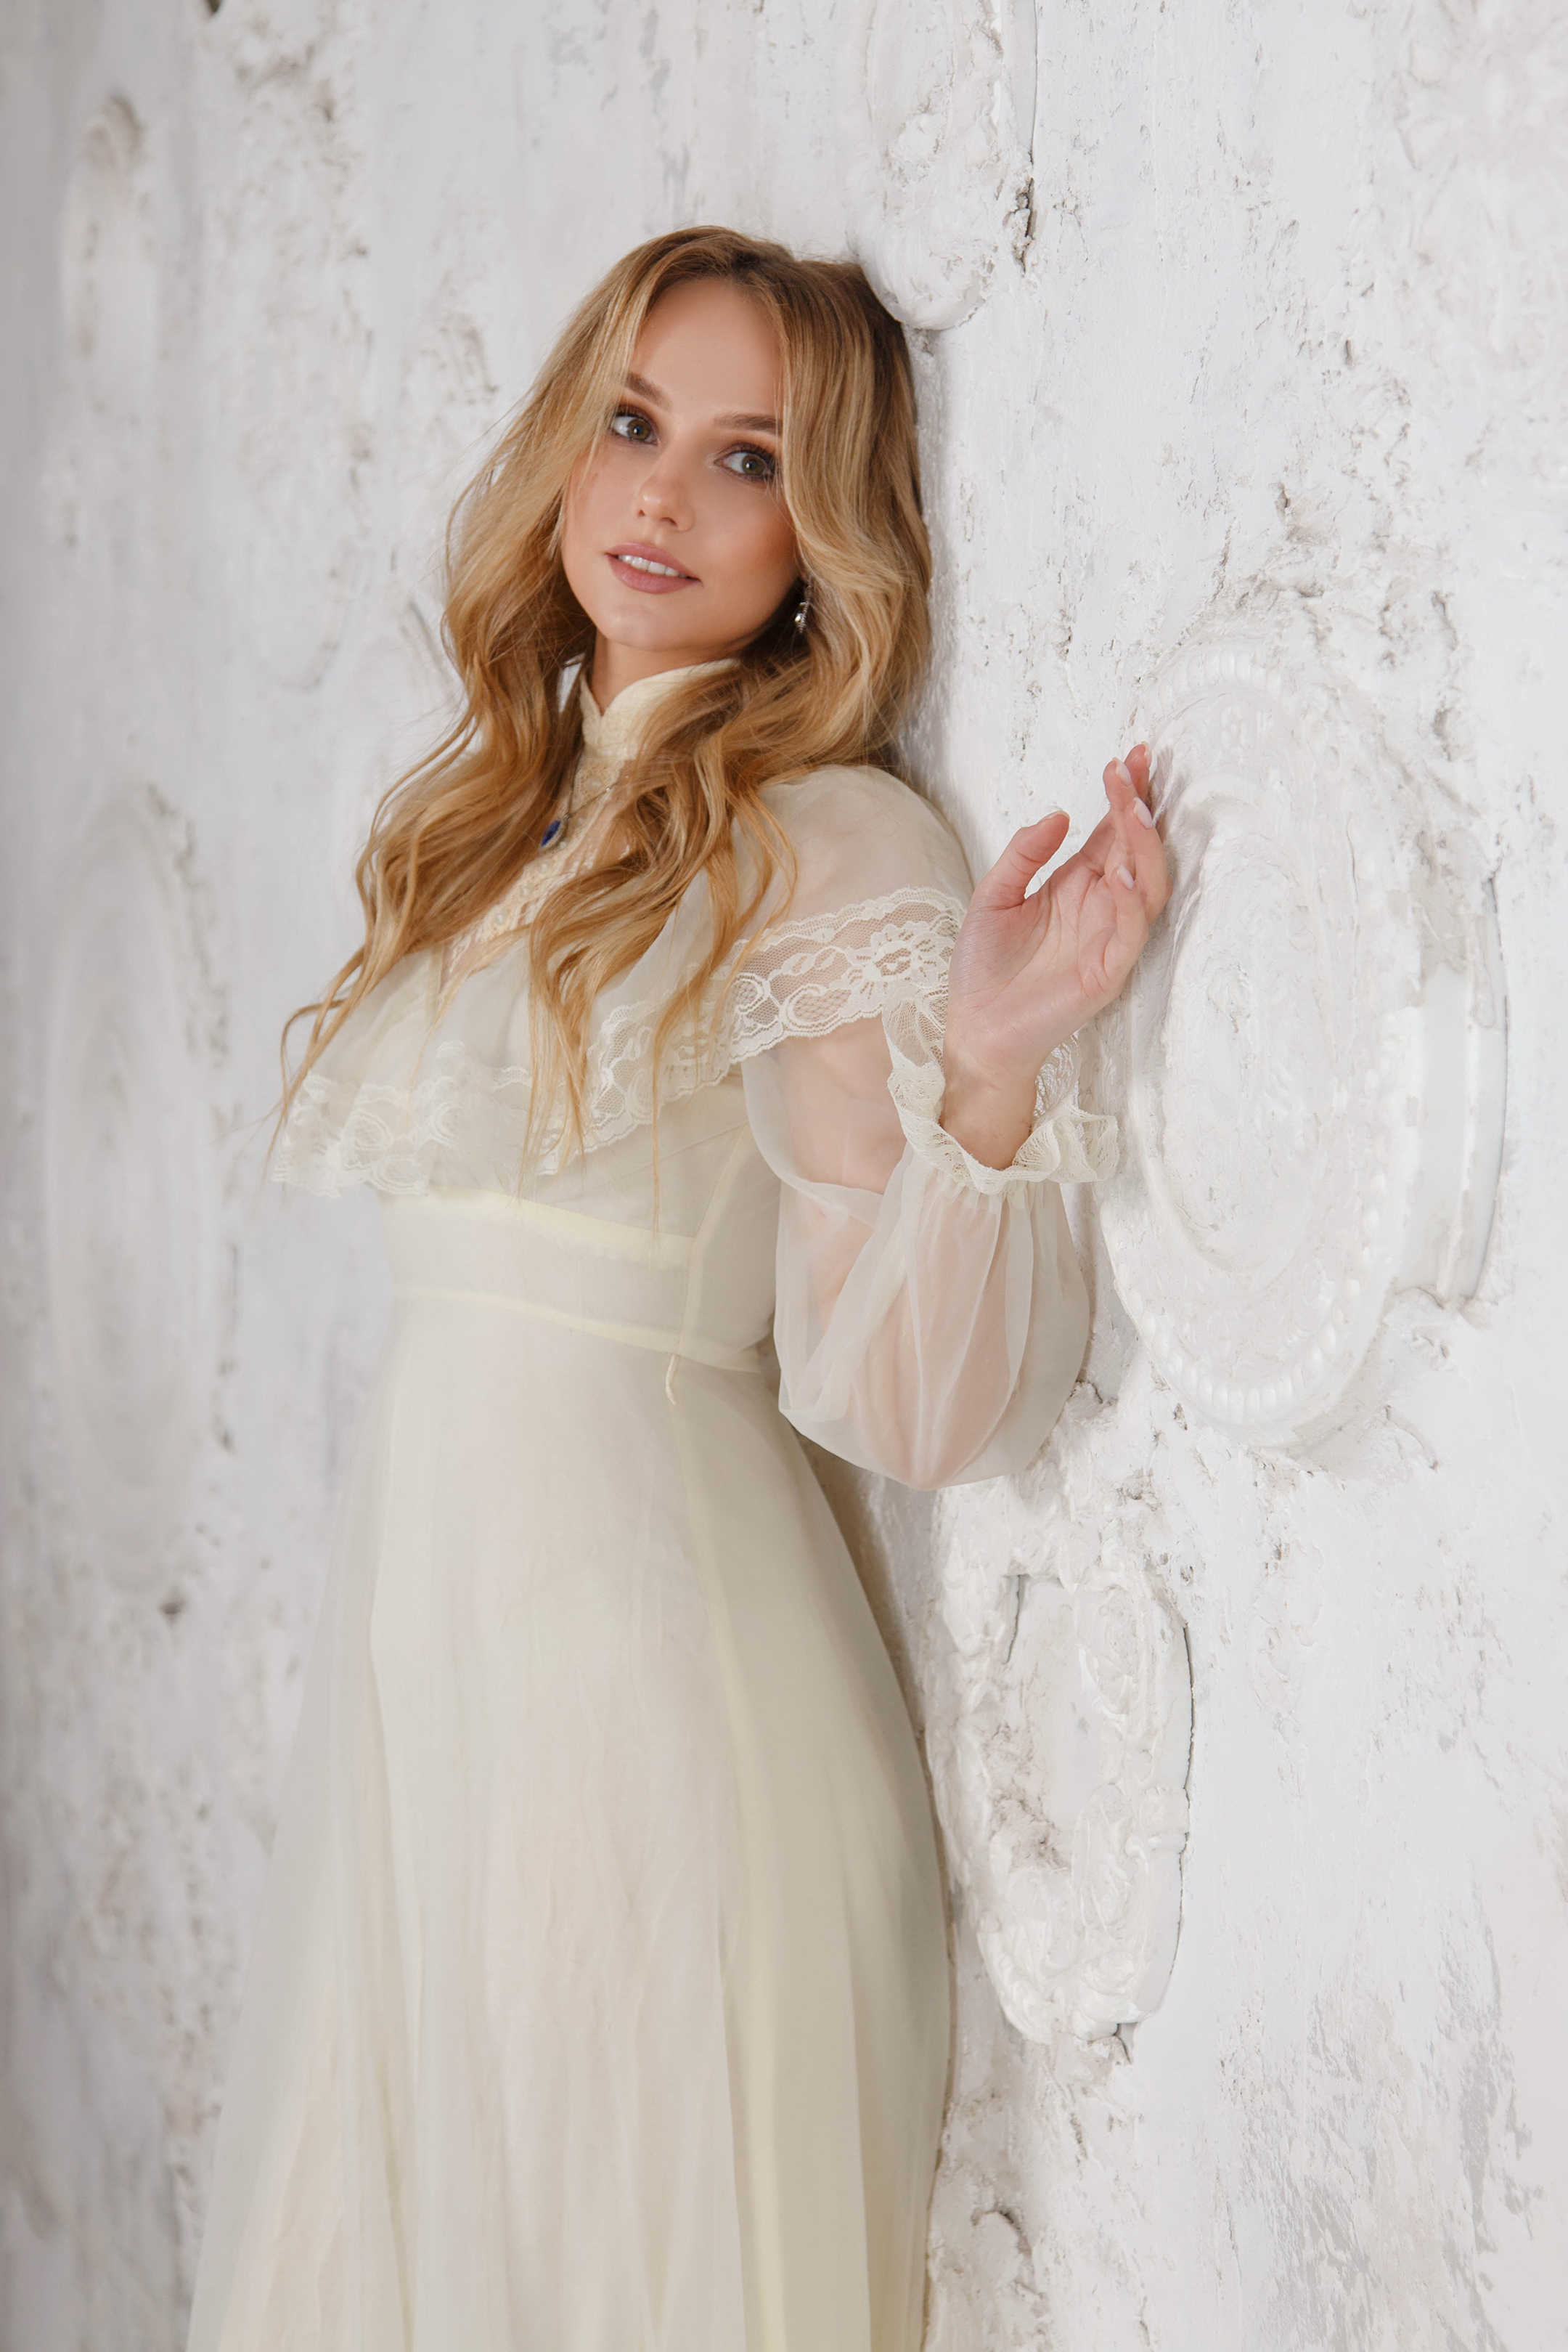 Marie Dashkova Women Blonde Smiling Wavy Hair Dress White Clothing Wall White 2160x3239